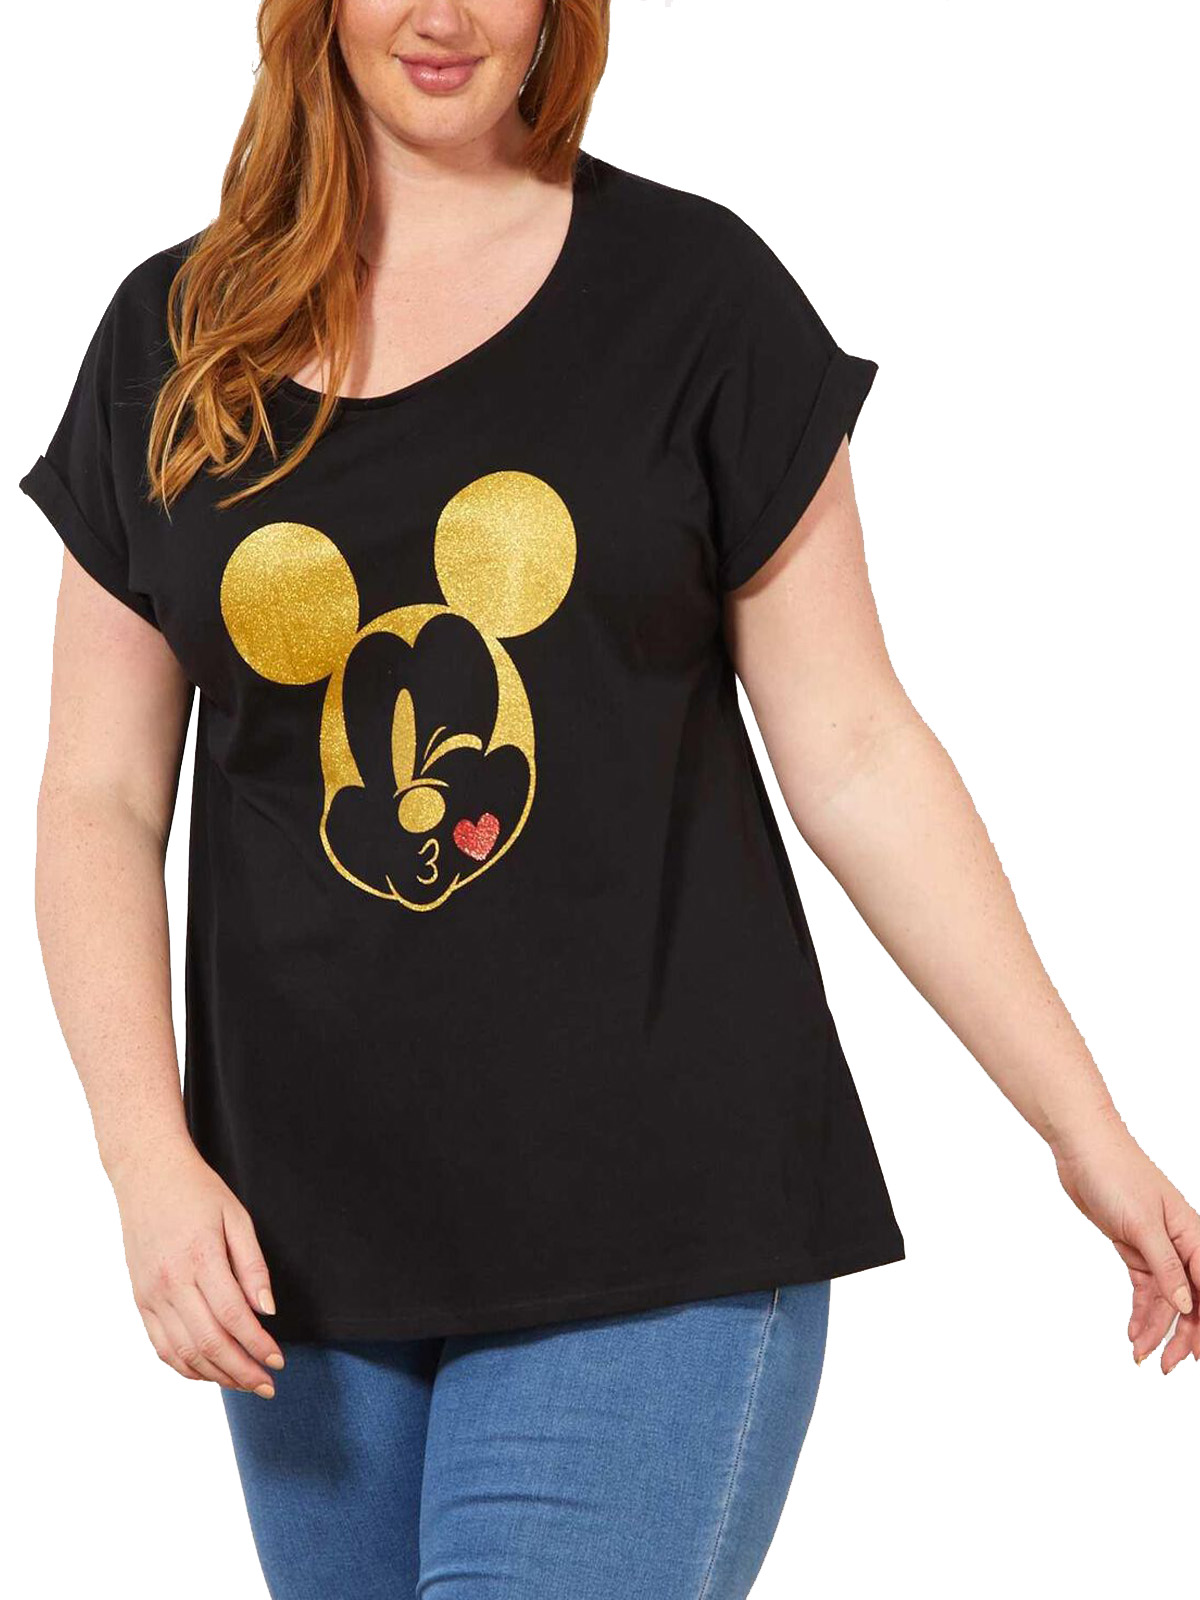 KIABI - - Disney BLACK Gold Print MICKEY MOUSE Cotton T-Shirt - Plus Size  20/22 to 32/34 (